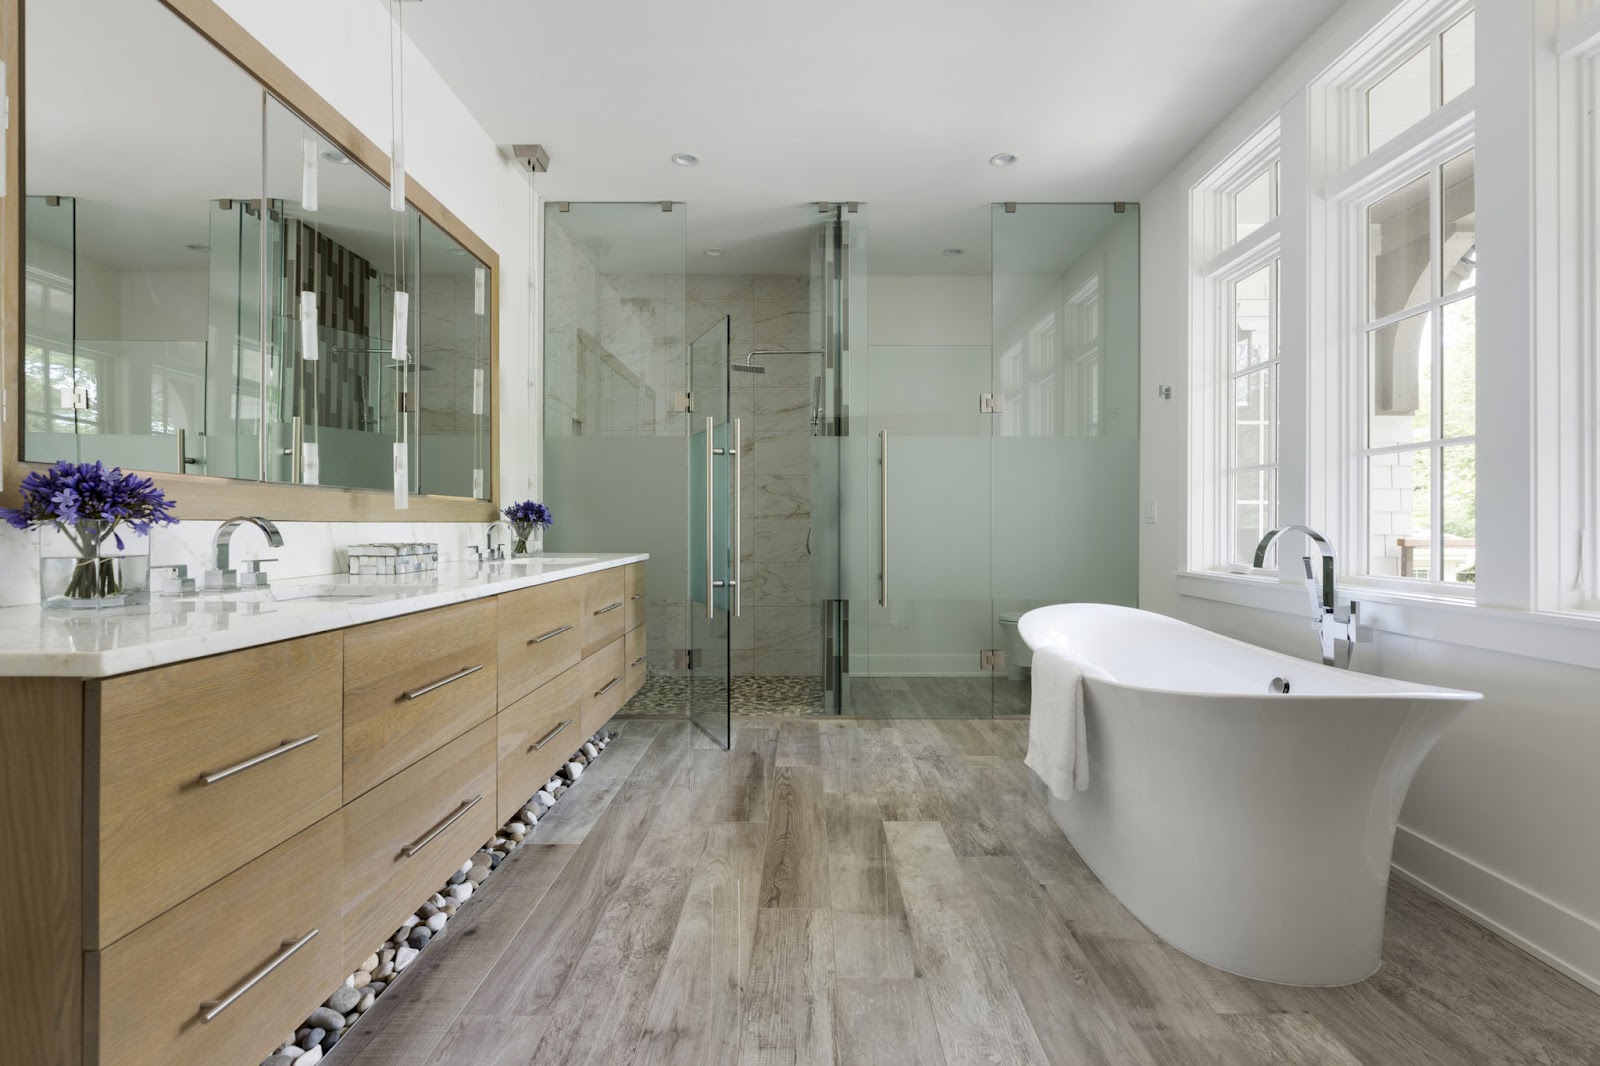 A bathroom with a double vanity, sauna, custom wood floors, and large windows